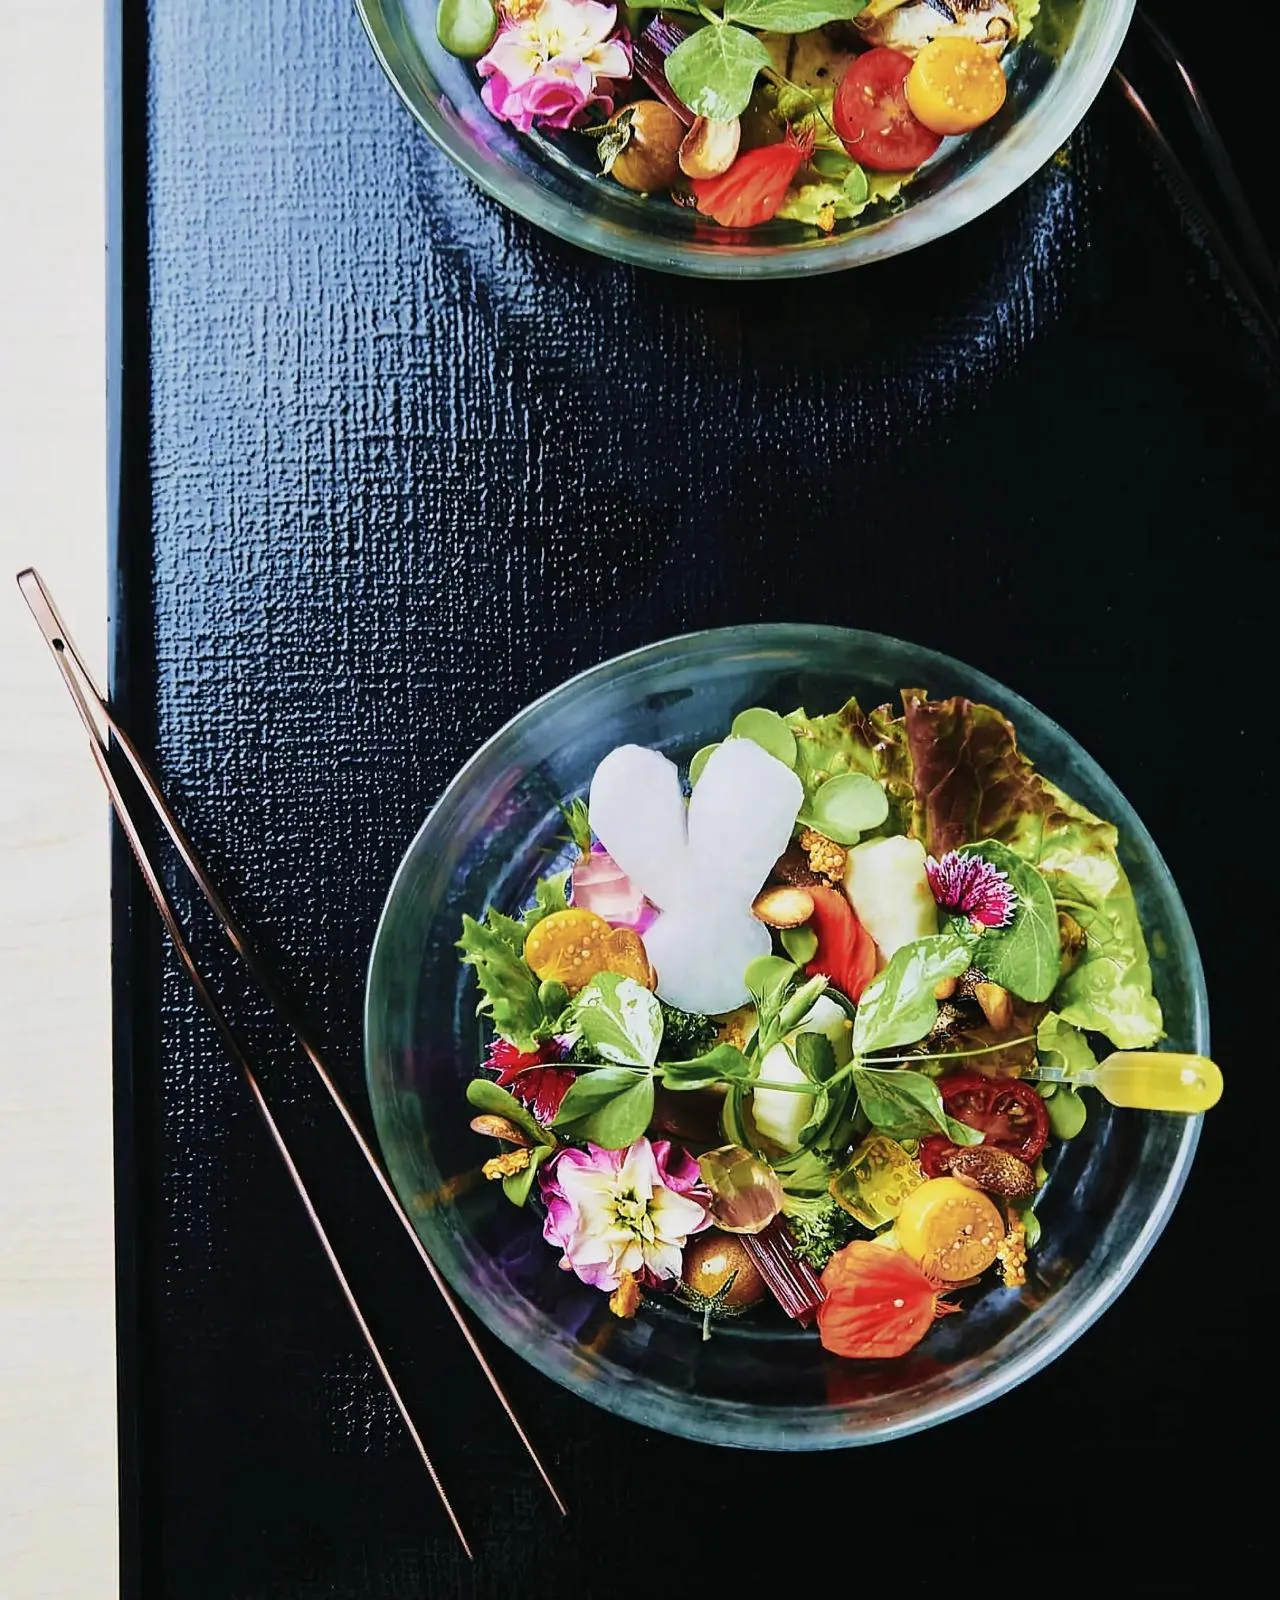 Table setup with a bowl of fresh salad, chopsticks, and a bunny-shaped object.